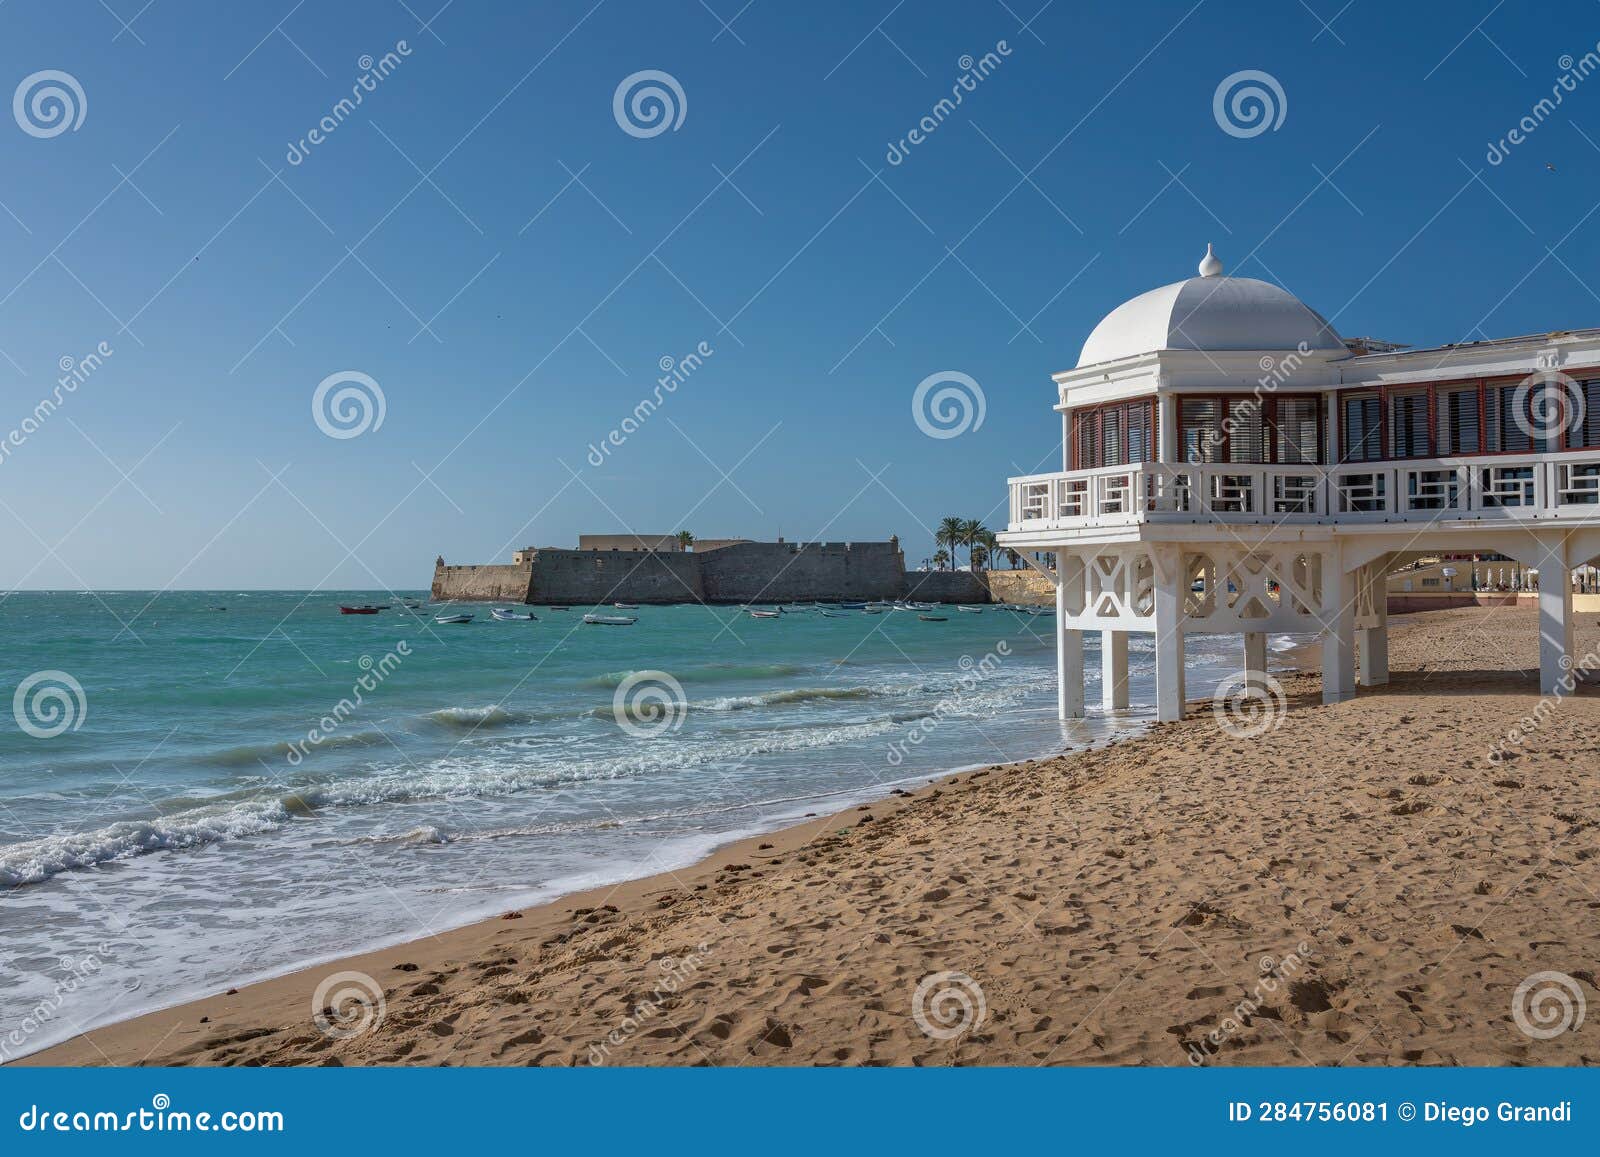 la caleta beach, balneario de la palma building and castle of santa catalina - cadiz, andalusia, spain